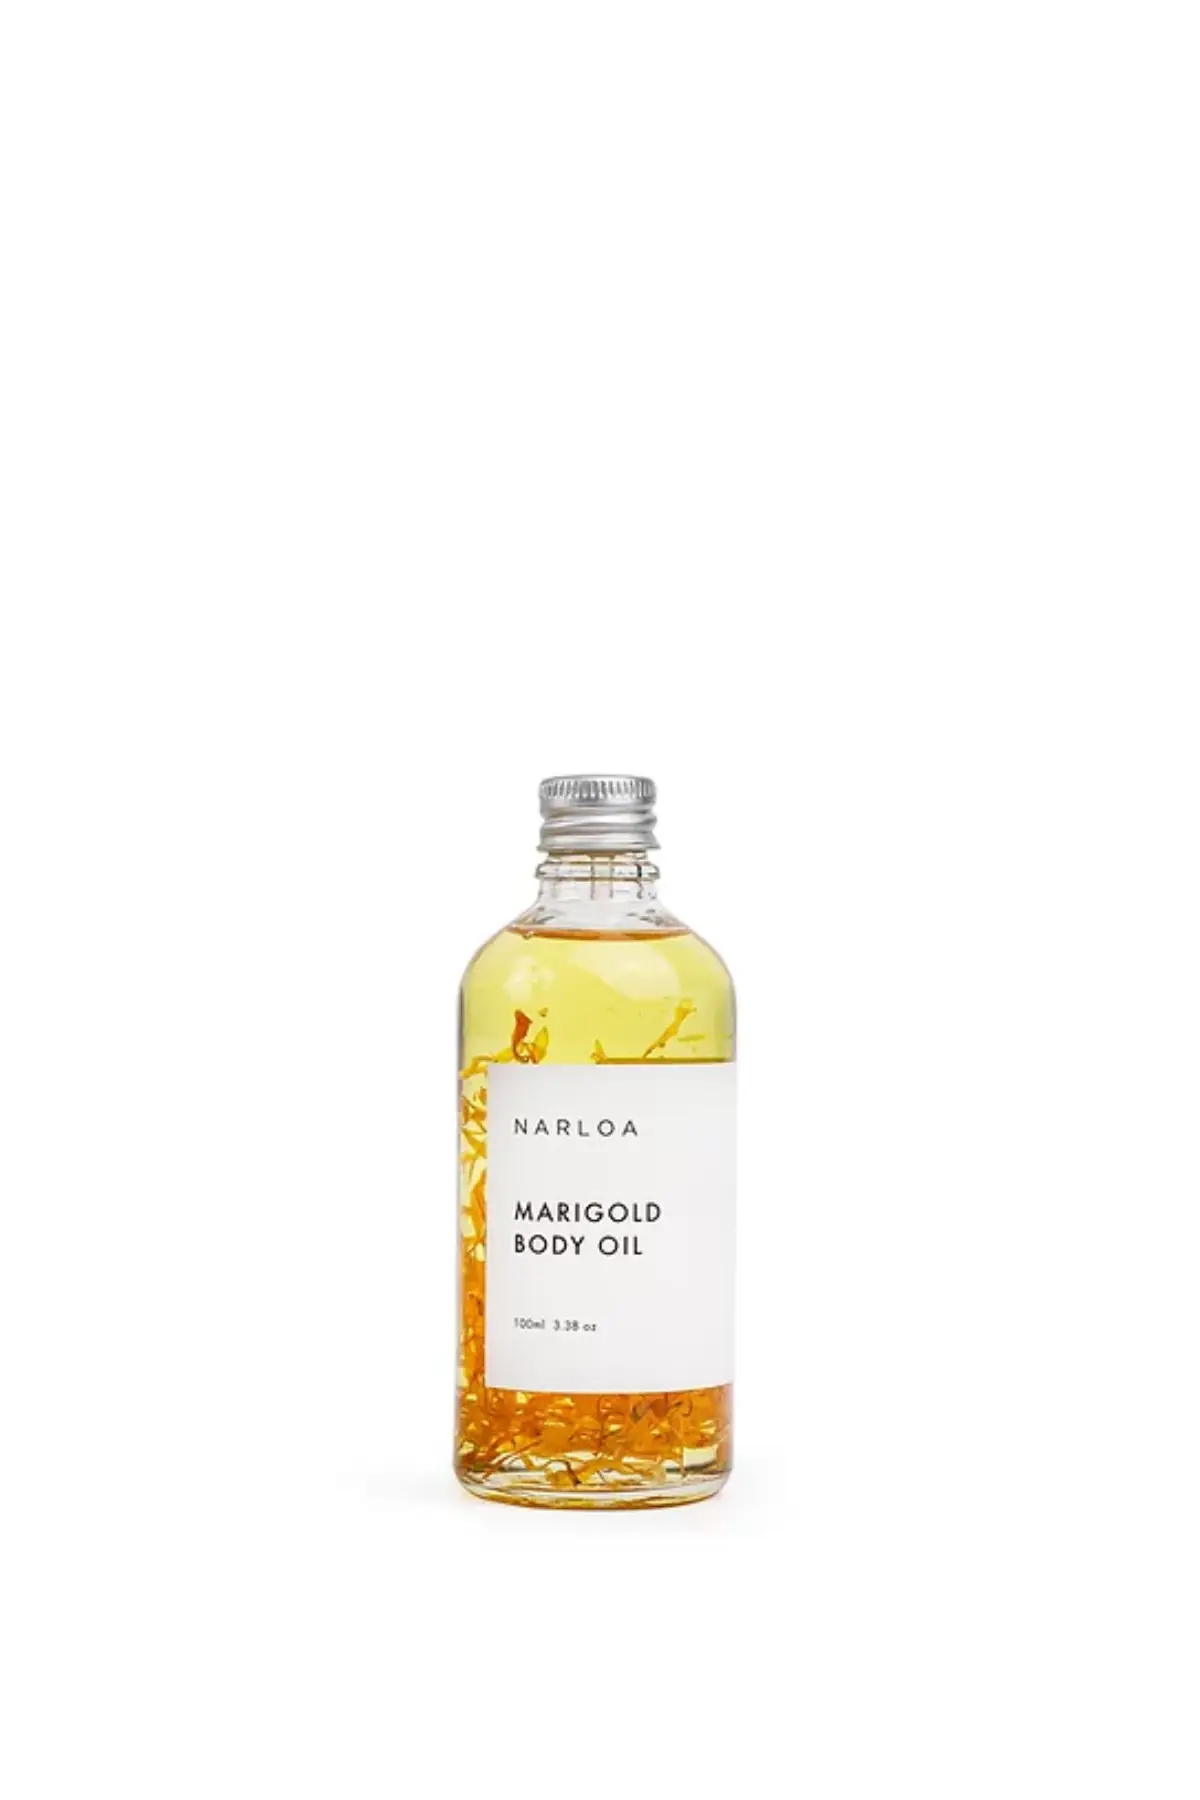 Narloa Marigold Body Oil